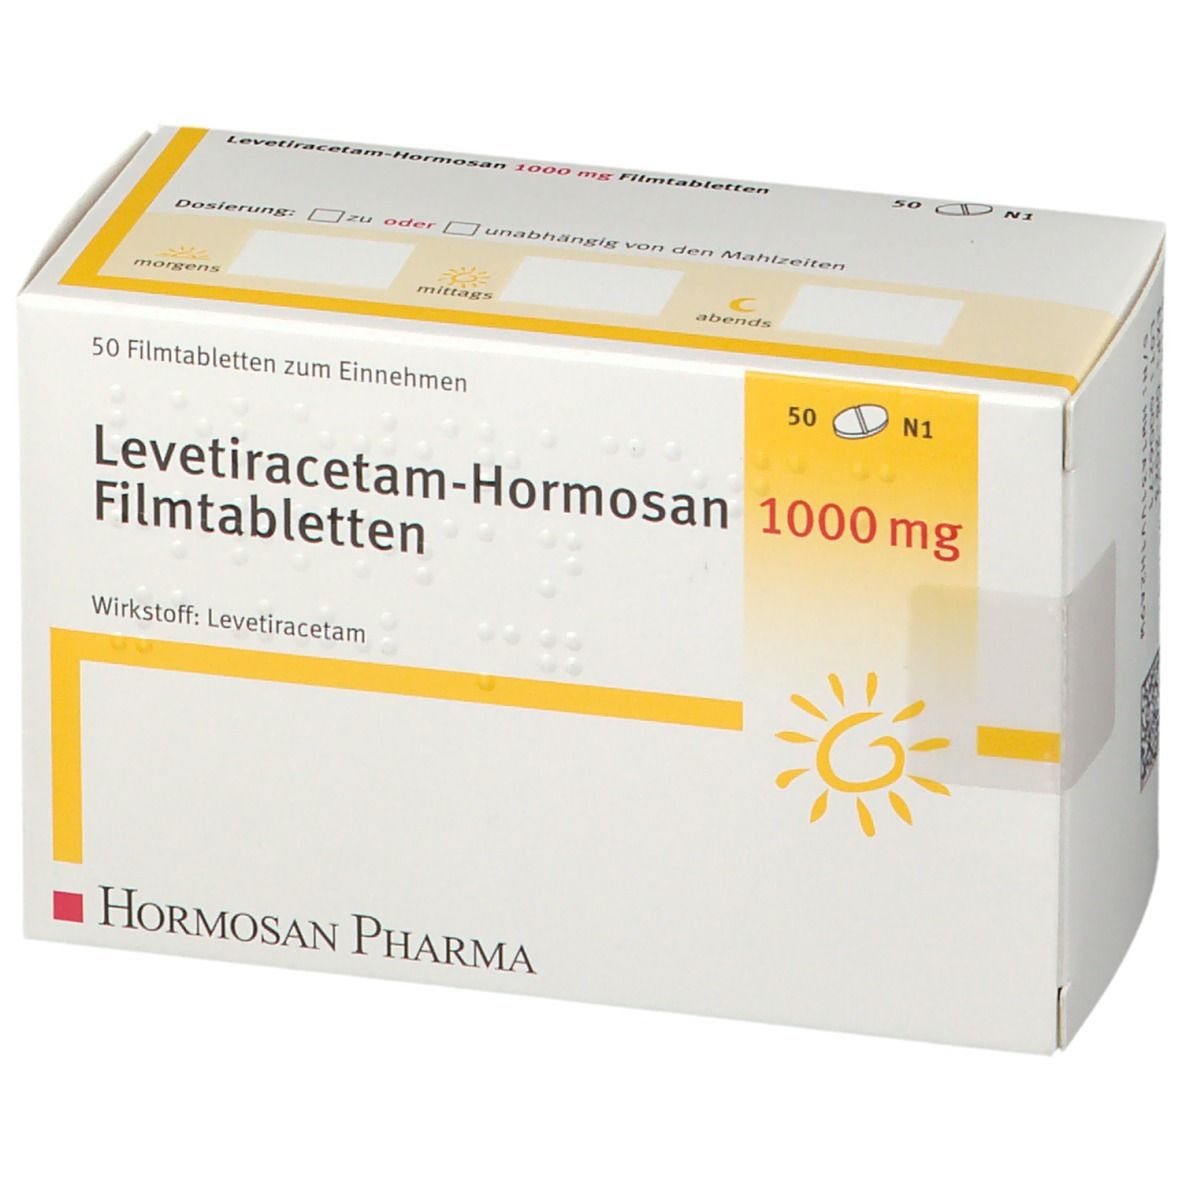 Levetiracetam-Hormosan 1000 mg